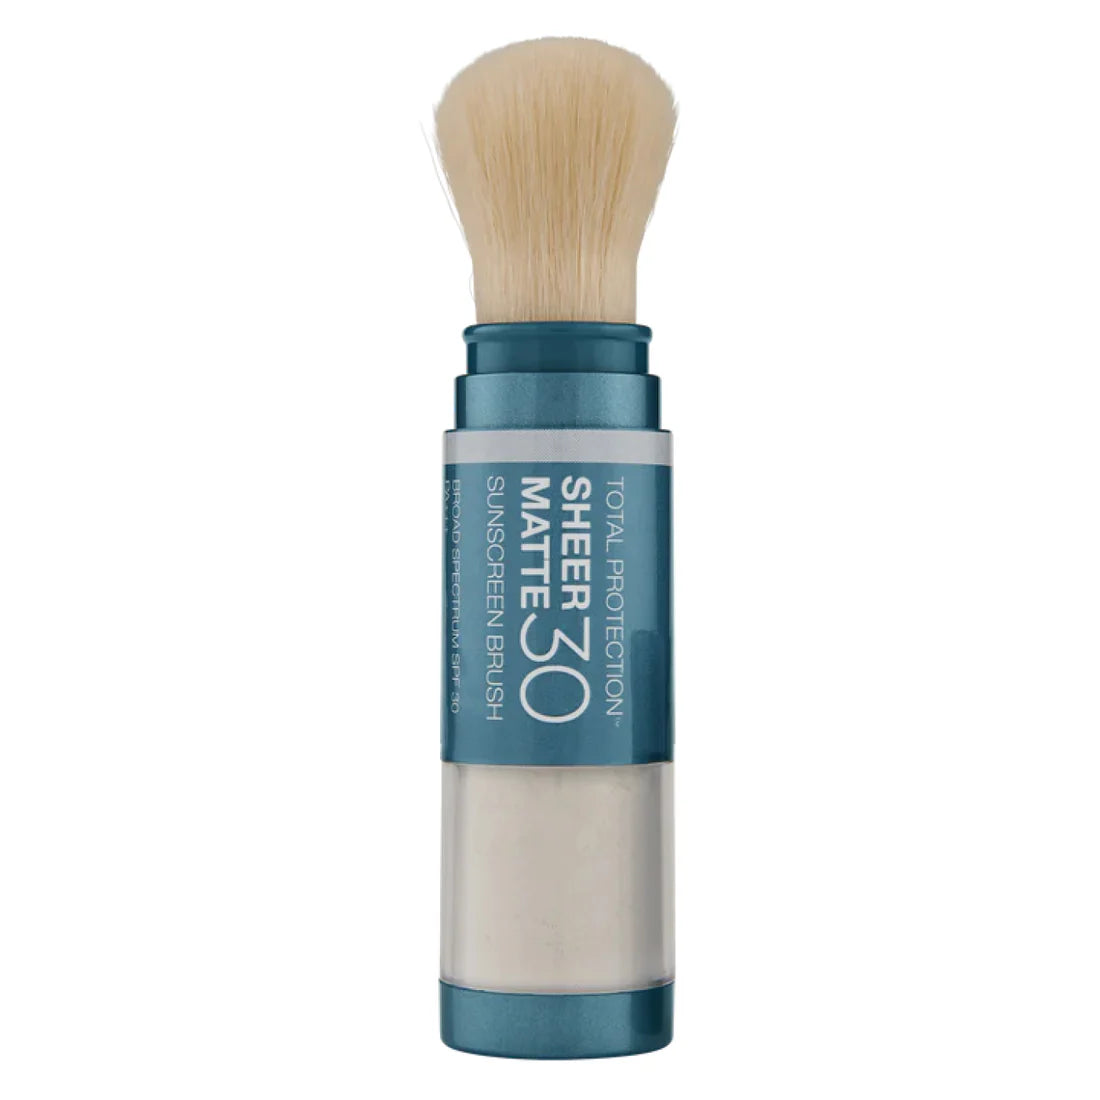 Colorescience Sheer Matte SPF 30 Sunscreen brush